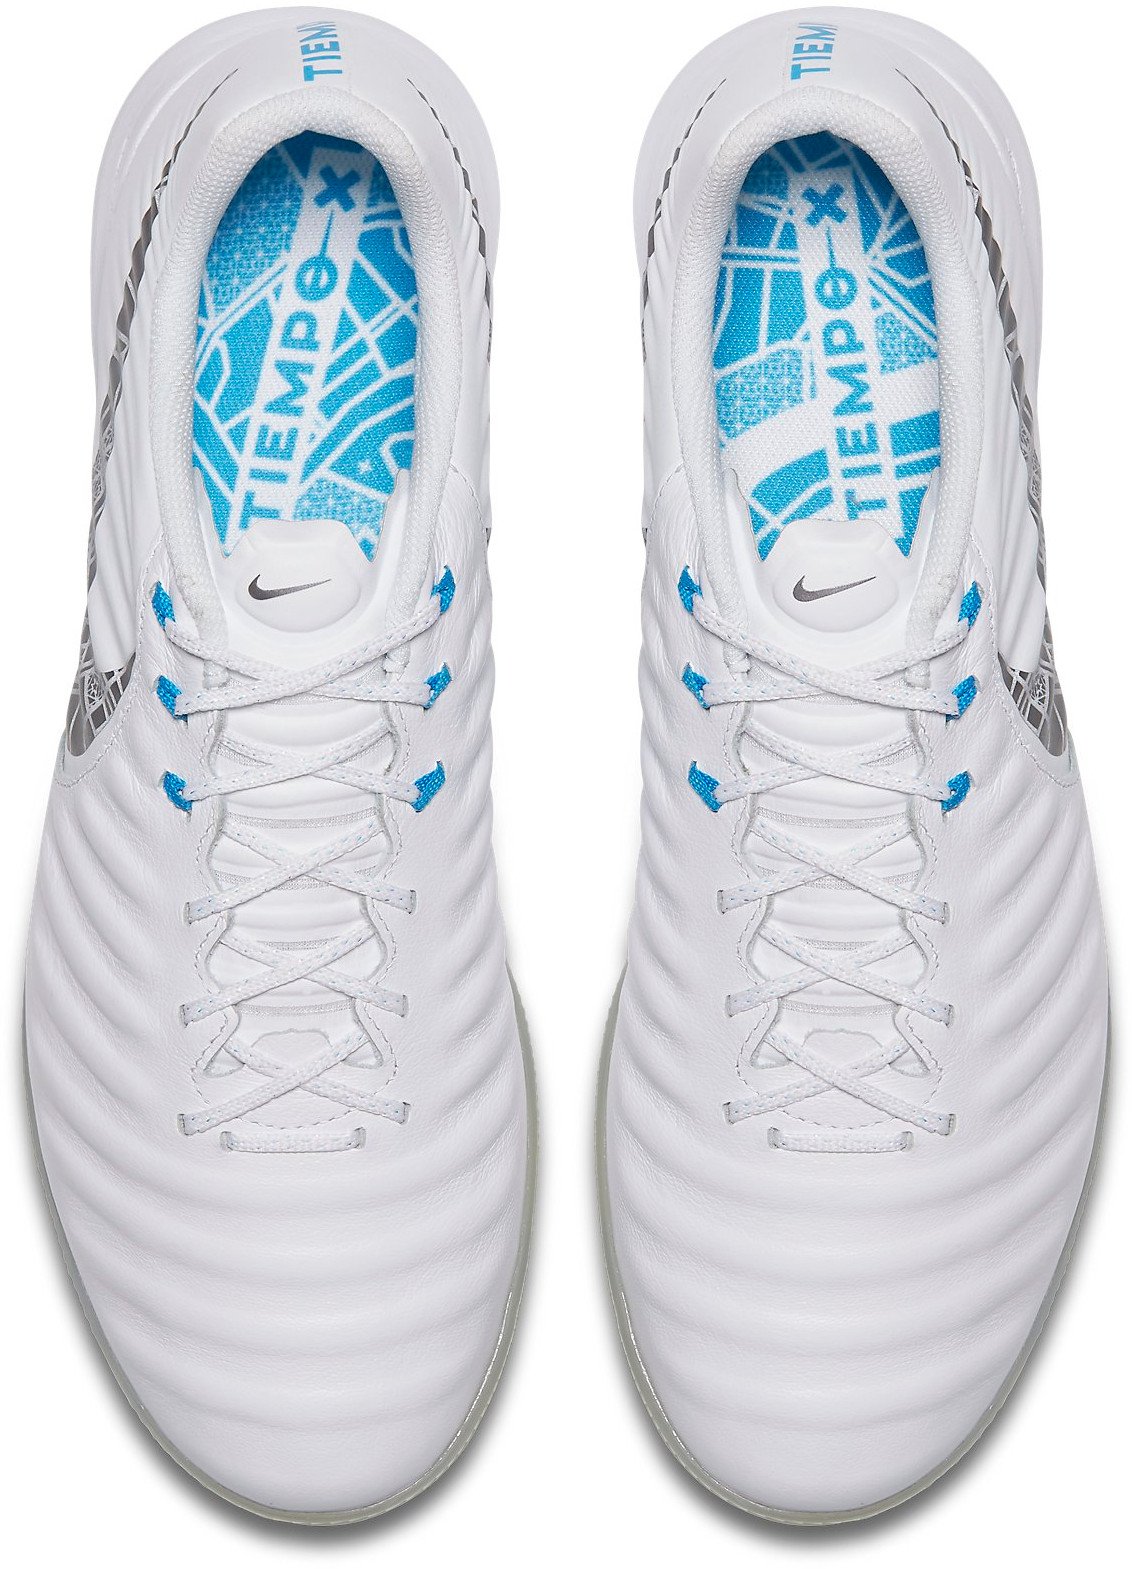 Football shoes Nike LUNAR LEGENDX 7 PRO 